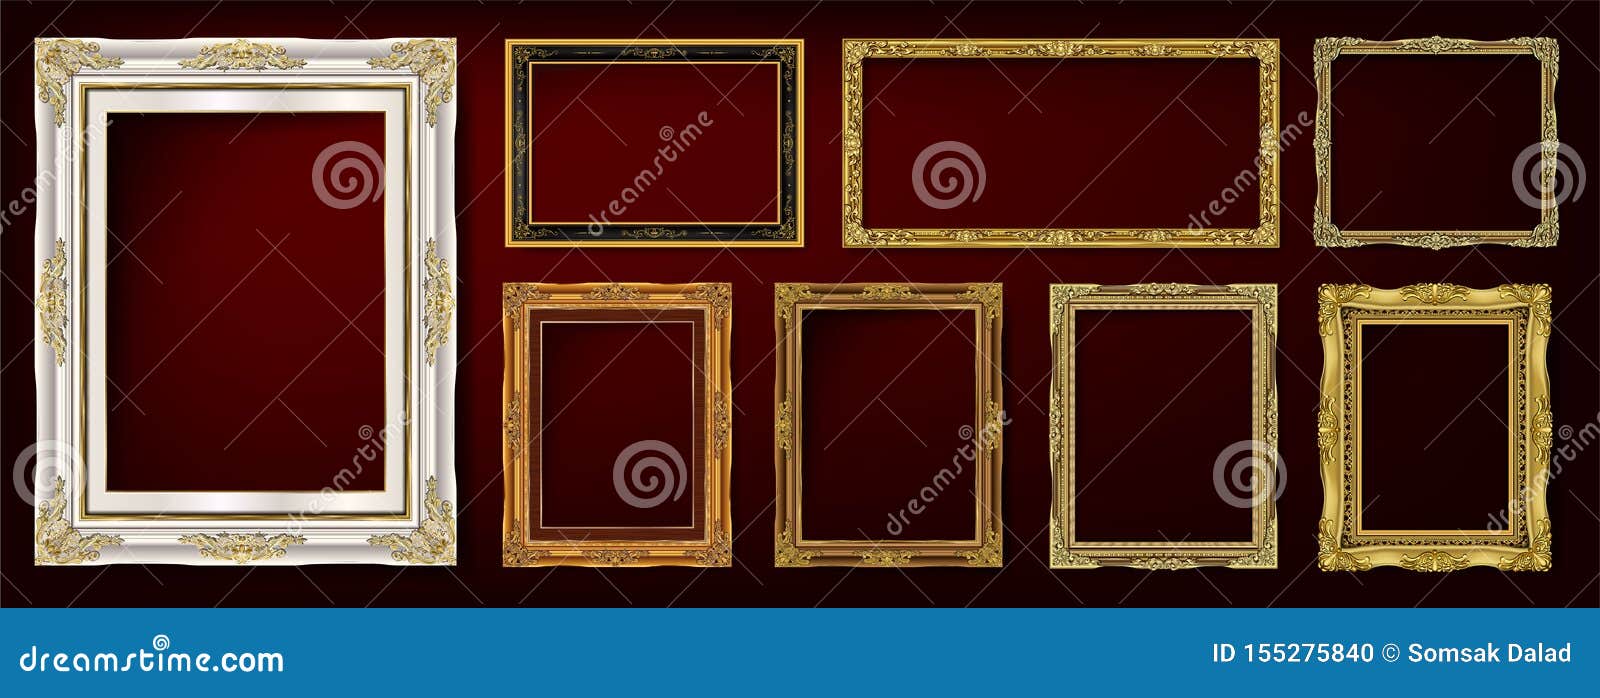 set of decorative vintage frames and borders set,gold photo frame with corner